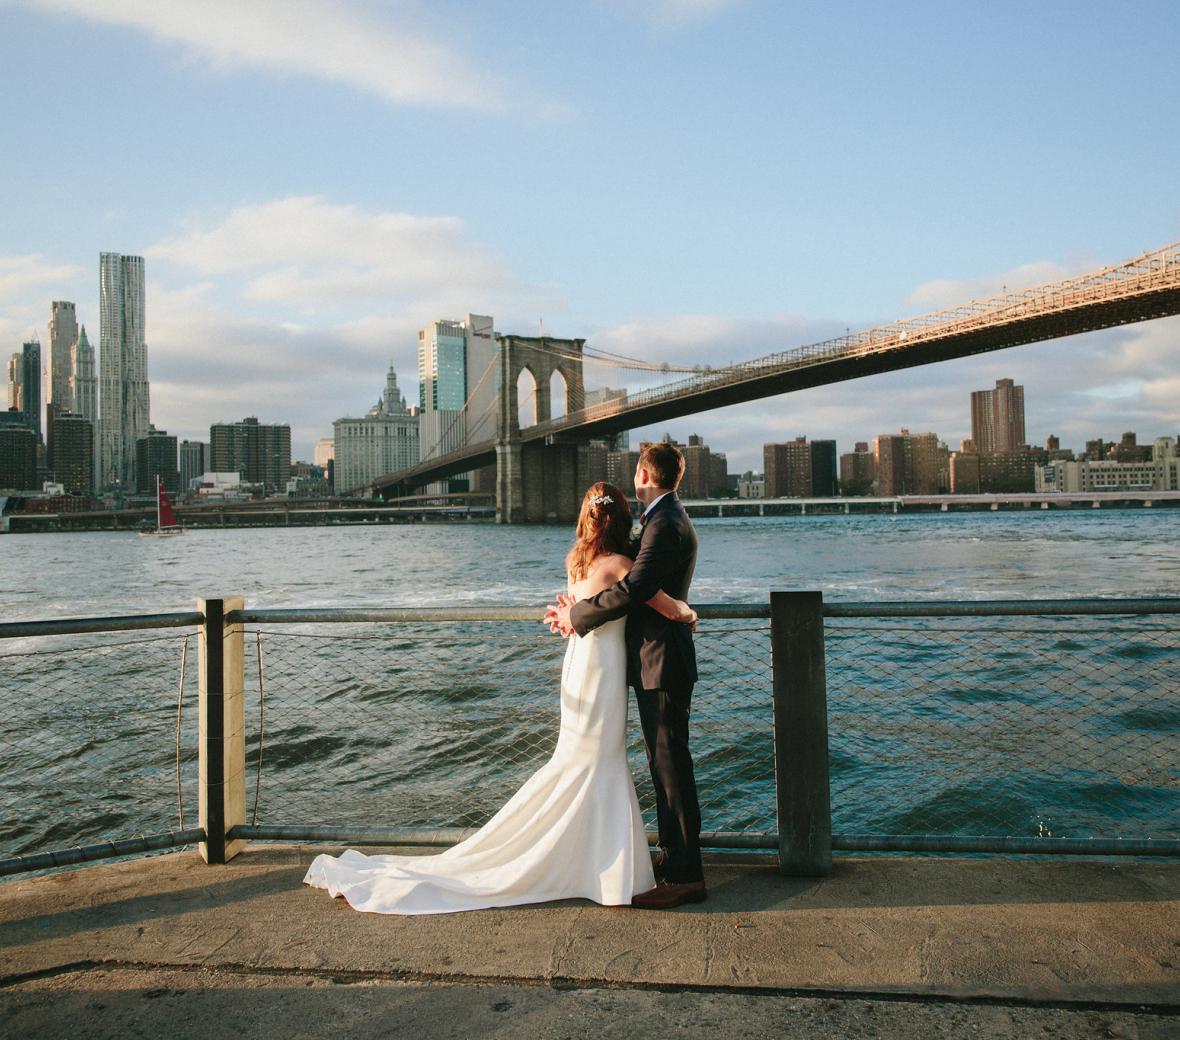 Couple stands on waterfront near brooklyn bridge in wedding attire